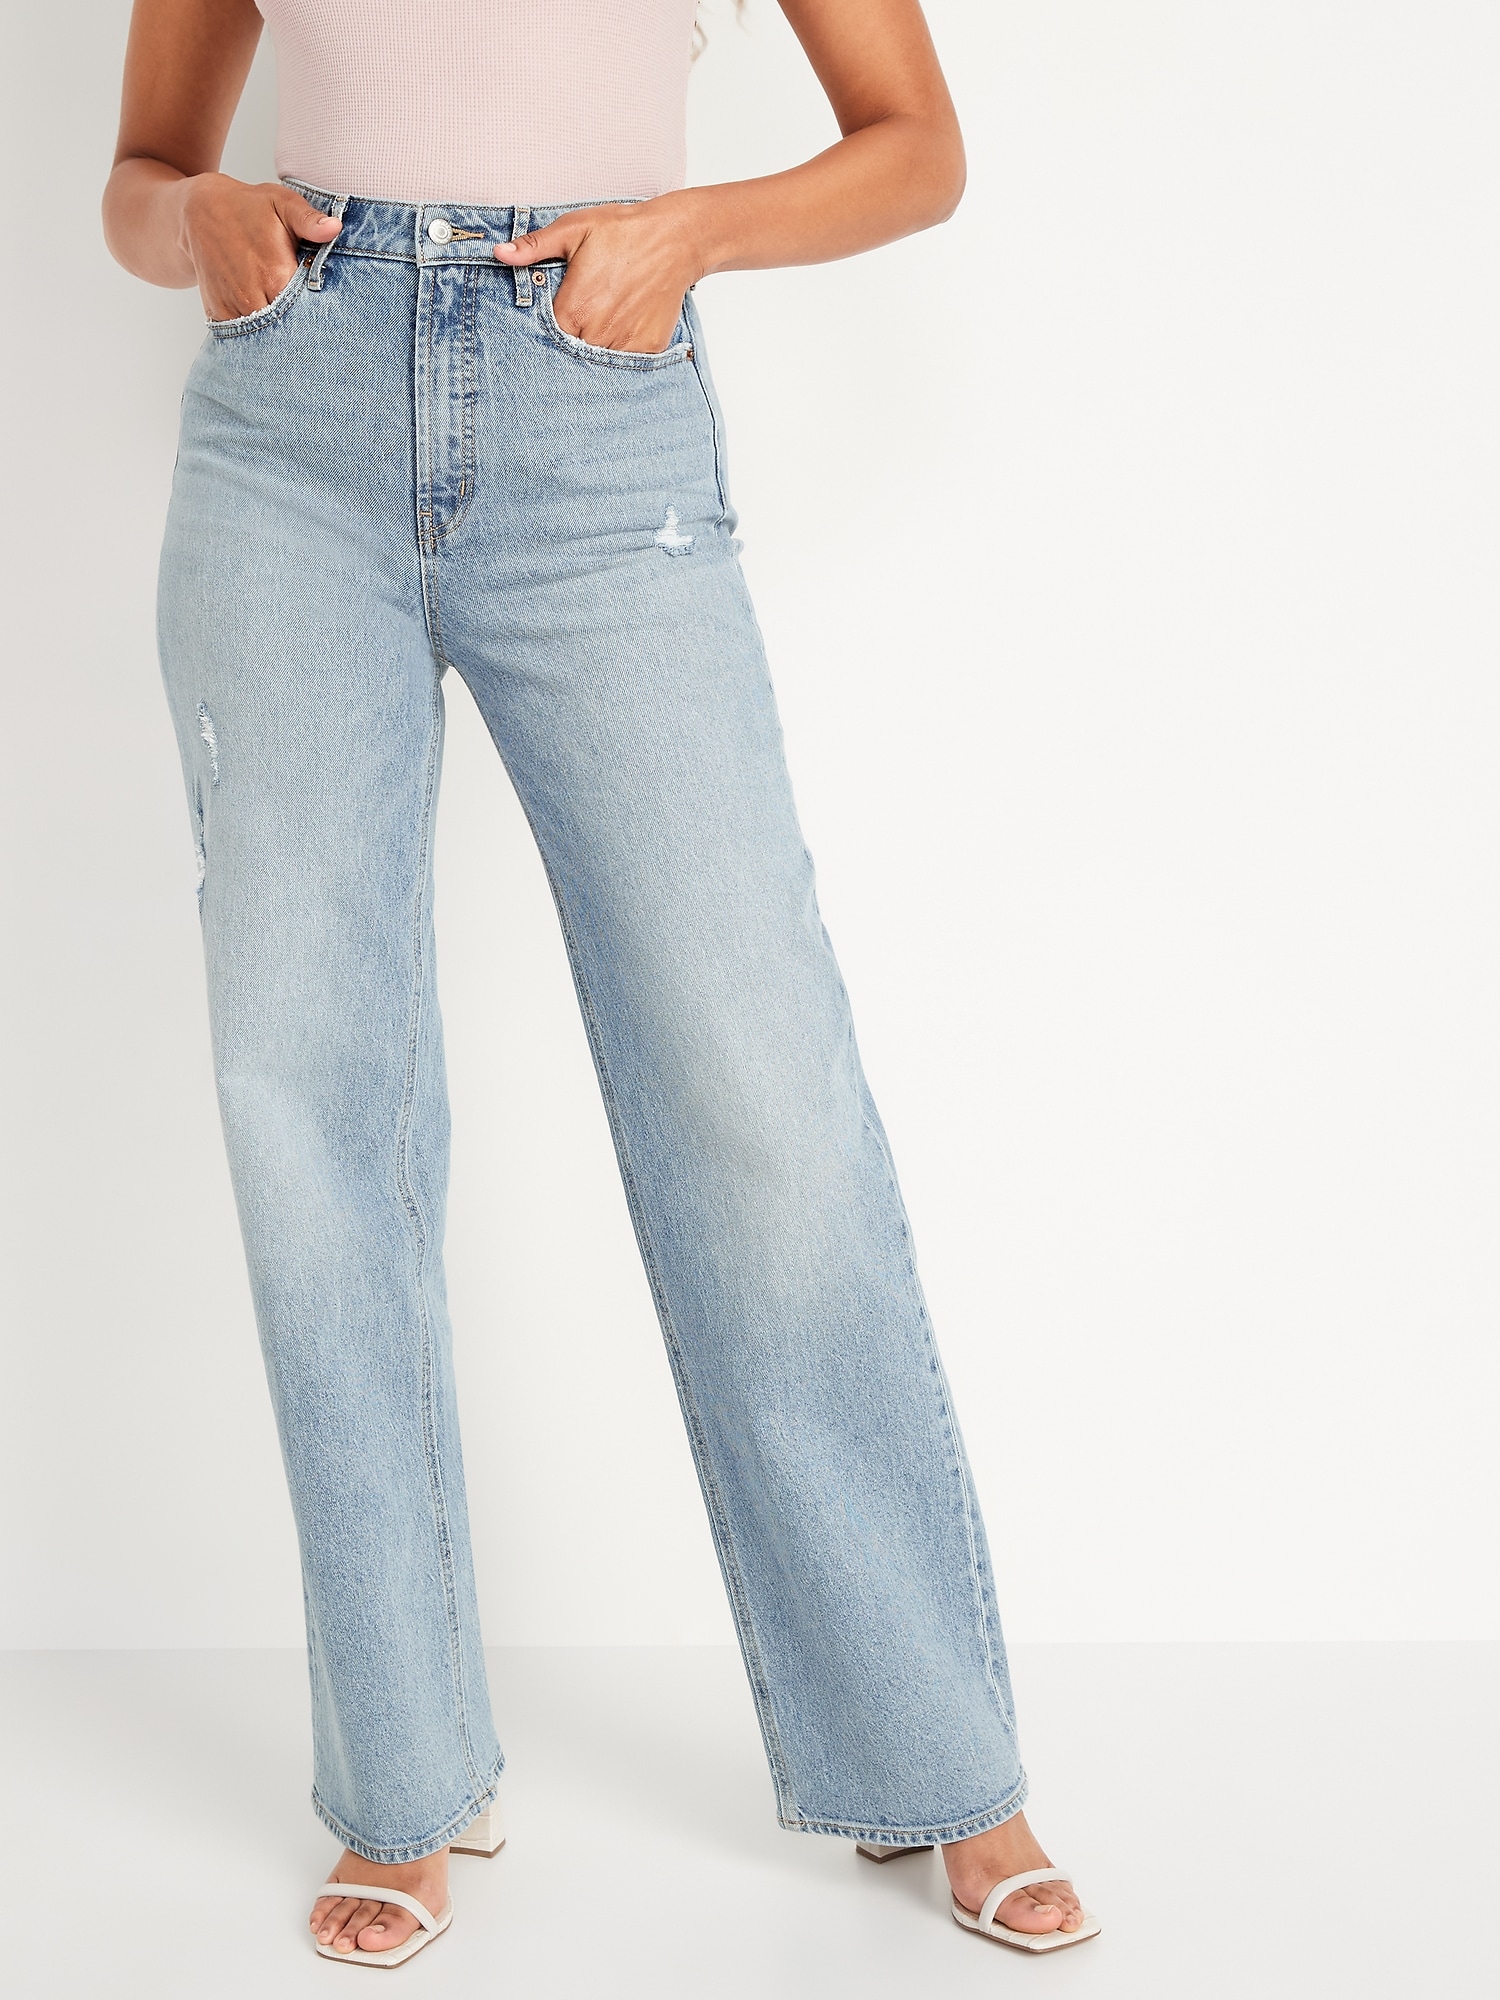 Ripped Jeans Women's Flared Jeans High Waist Hole Wide Leg Pants Denim  Streetwear Leggings XXL (Color : Blue, Size : Large)